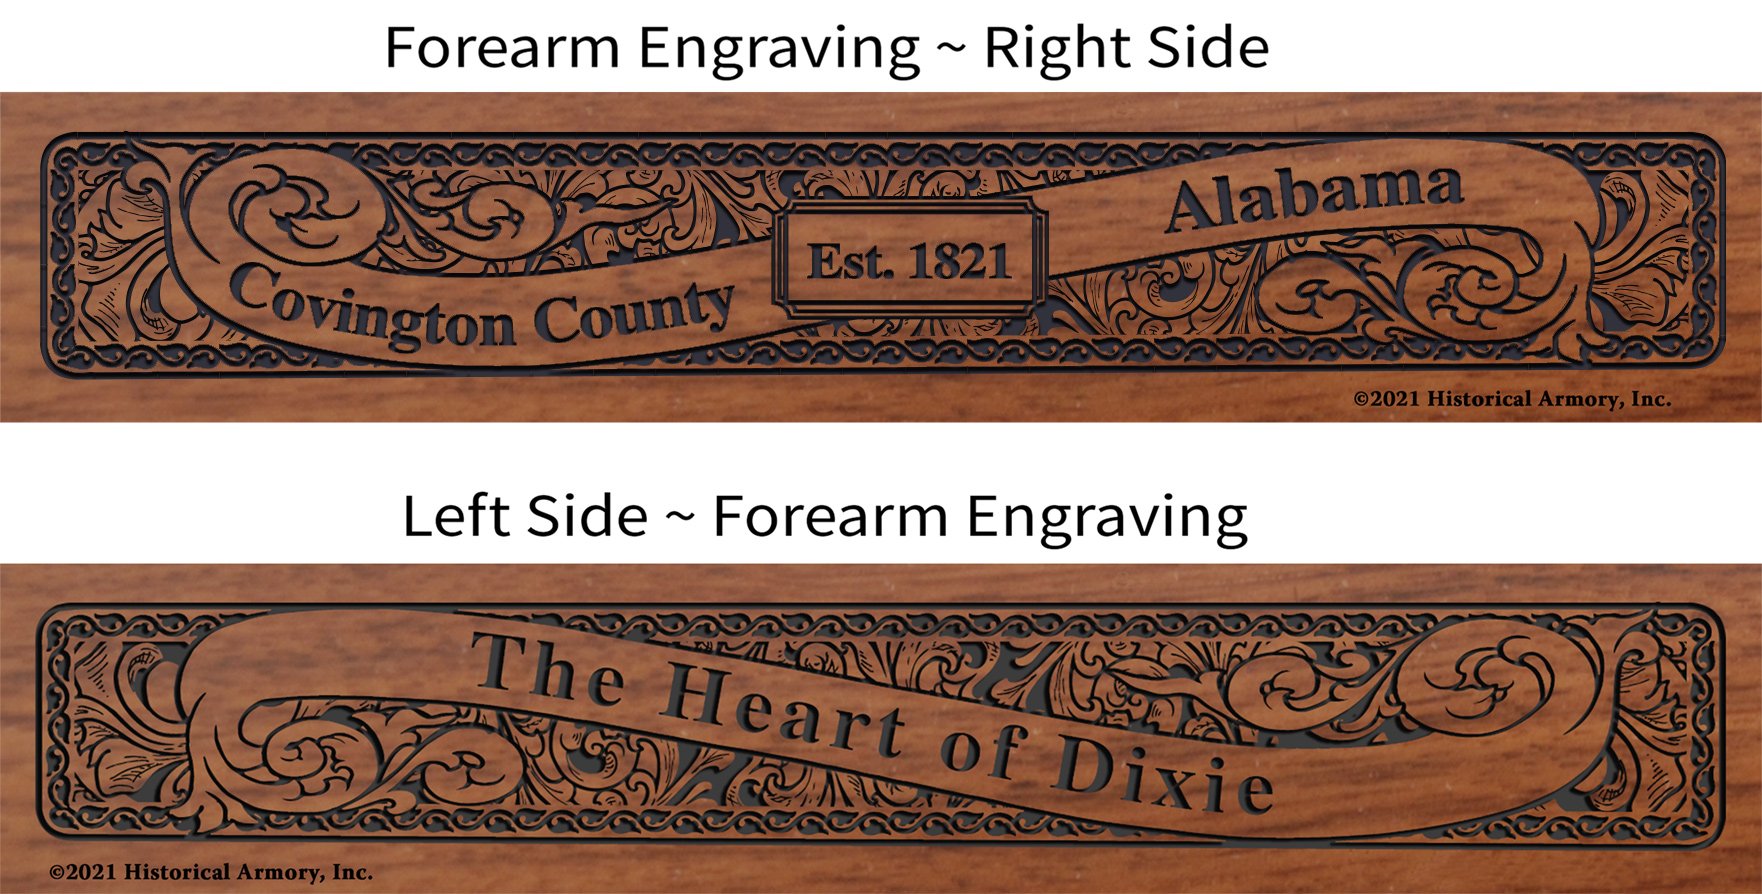 Covington County Alabama Establishment and Motto History Engraved Rifle Forearm